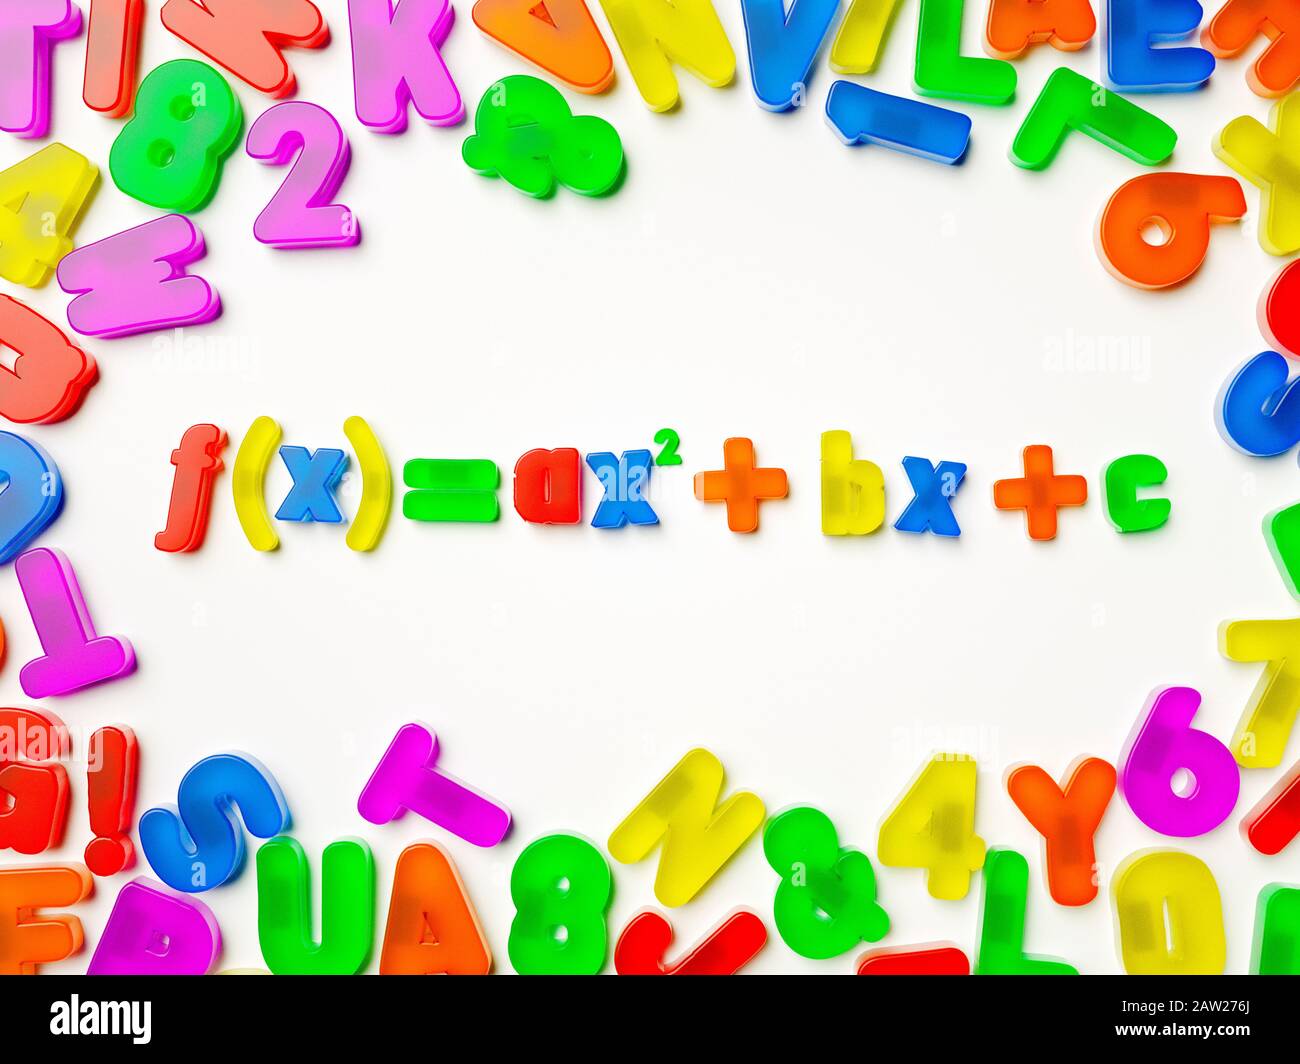 Plastic multi coloured fridge magnet alphabet spelling a complex mathematical formula Stock Photo